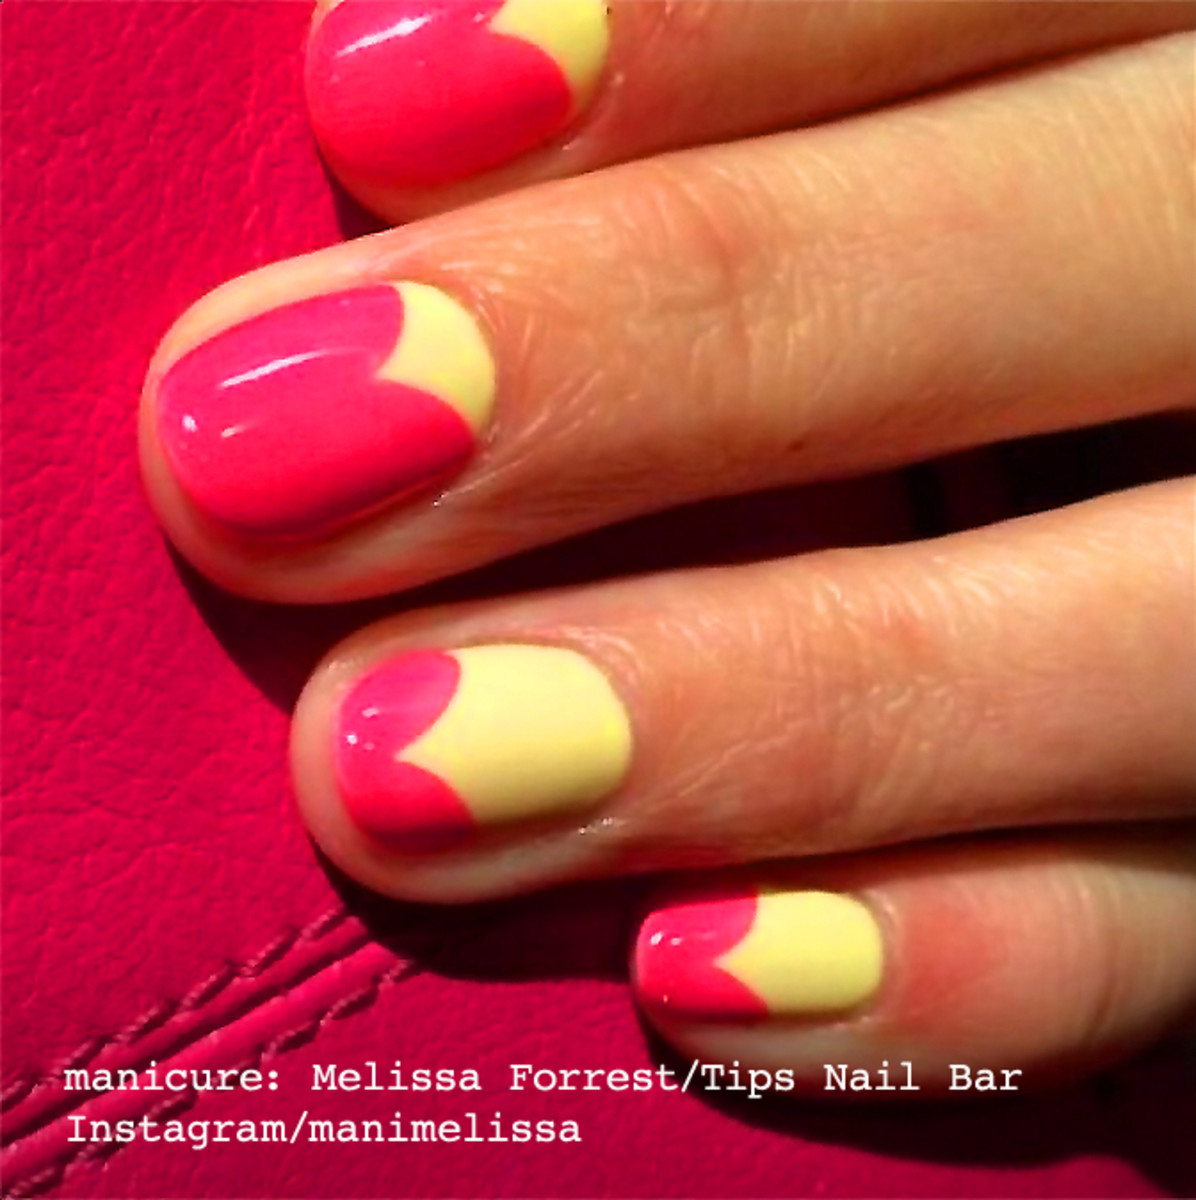 The Scalloped manicure_tulip manicure_sweetheart manicure_Melissa Forrest_Instagram